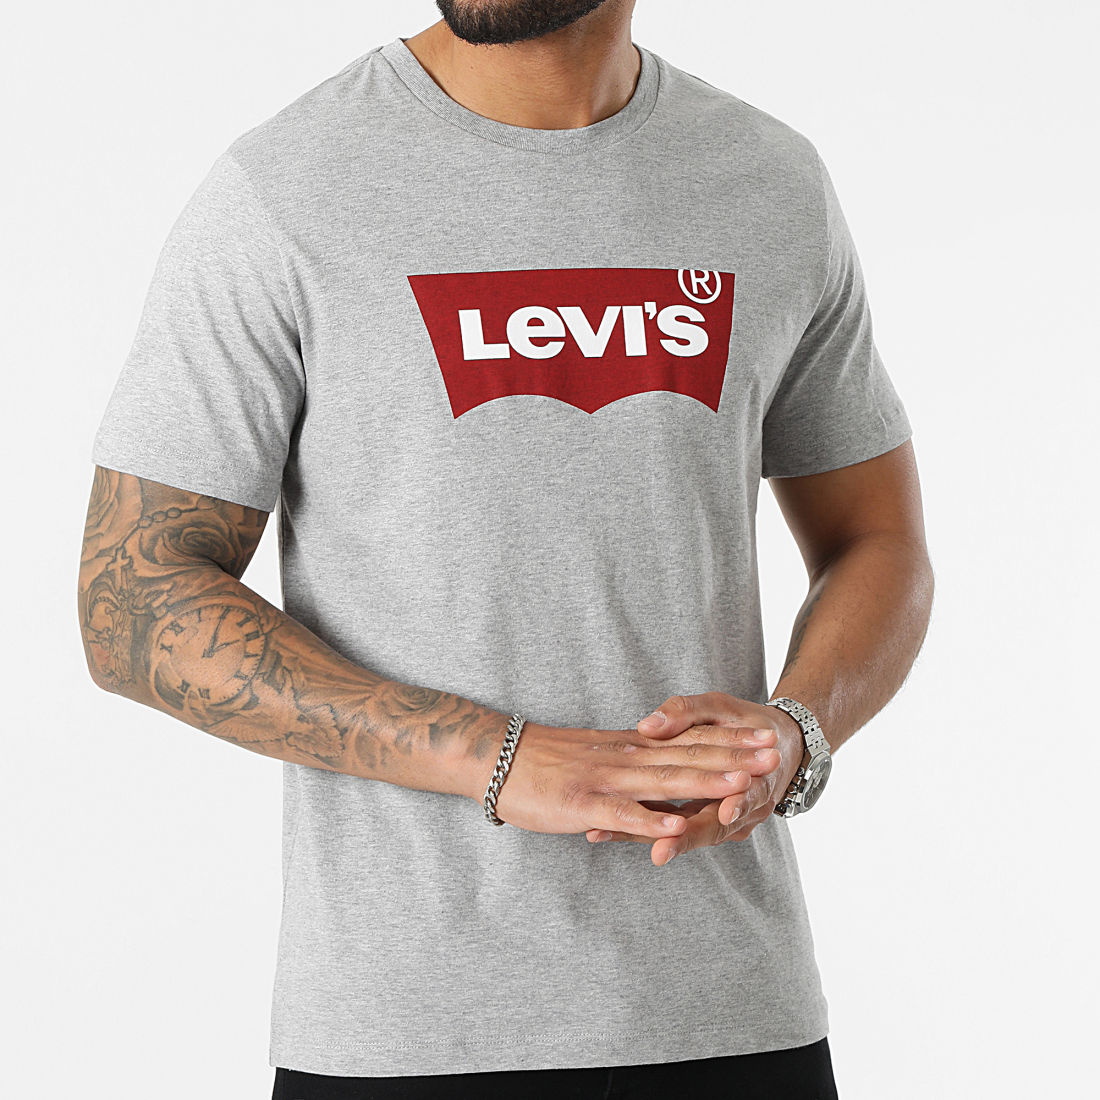 Levi's - Tee Shirt 17783 Blanc 